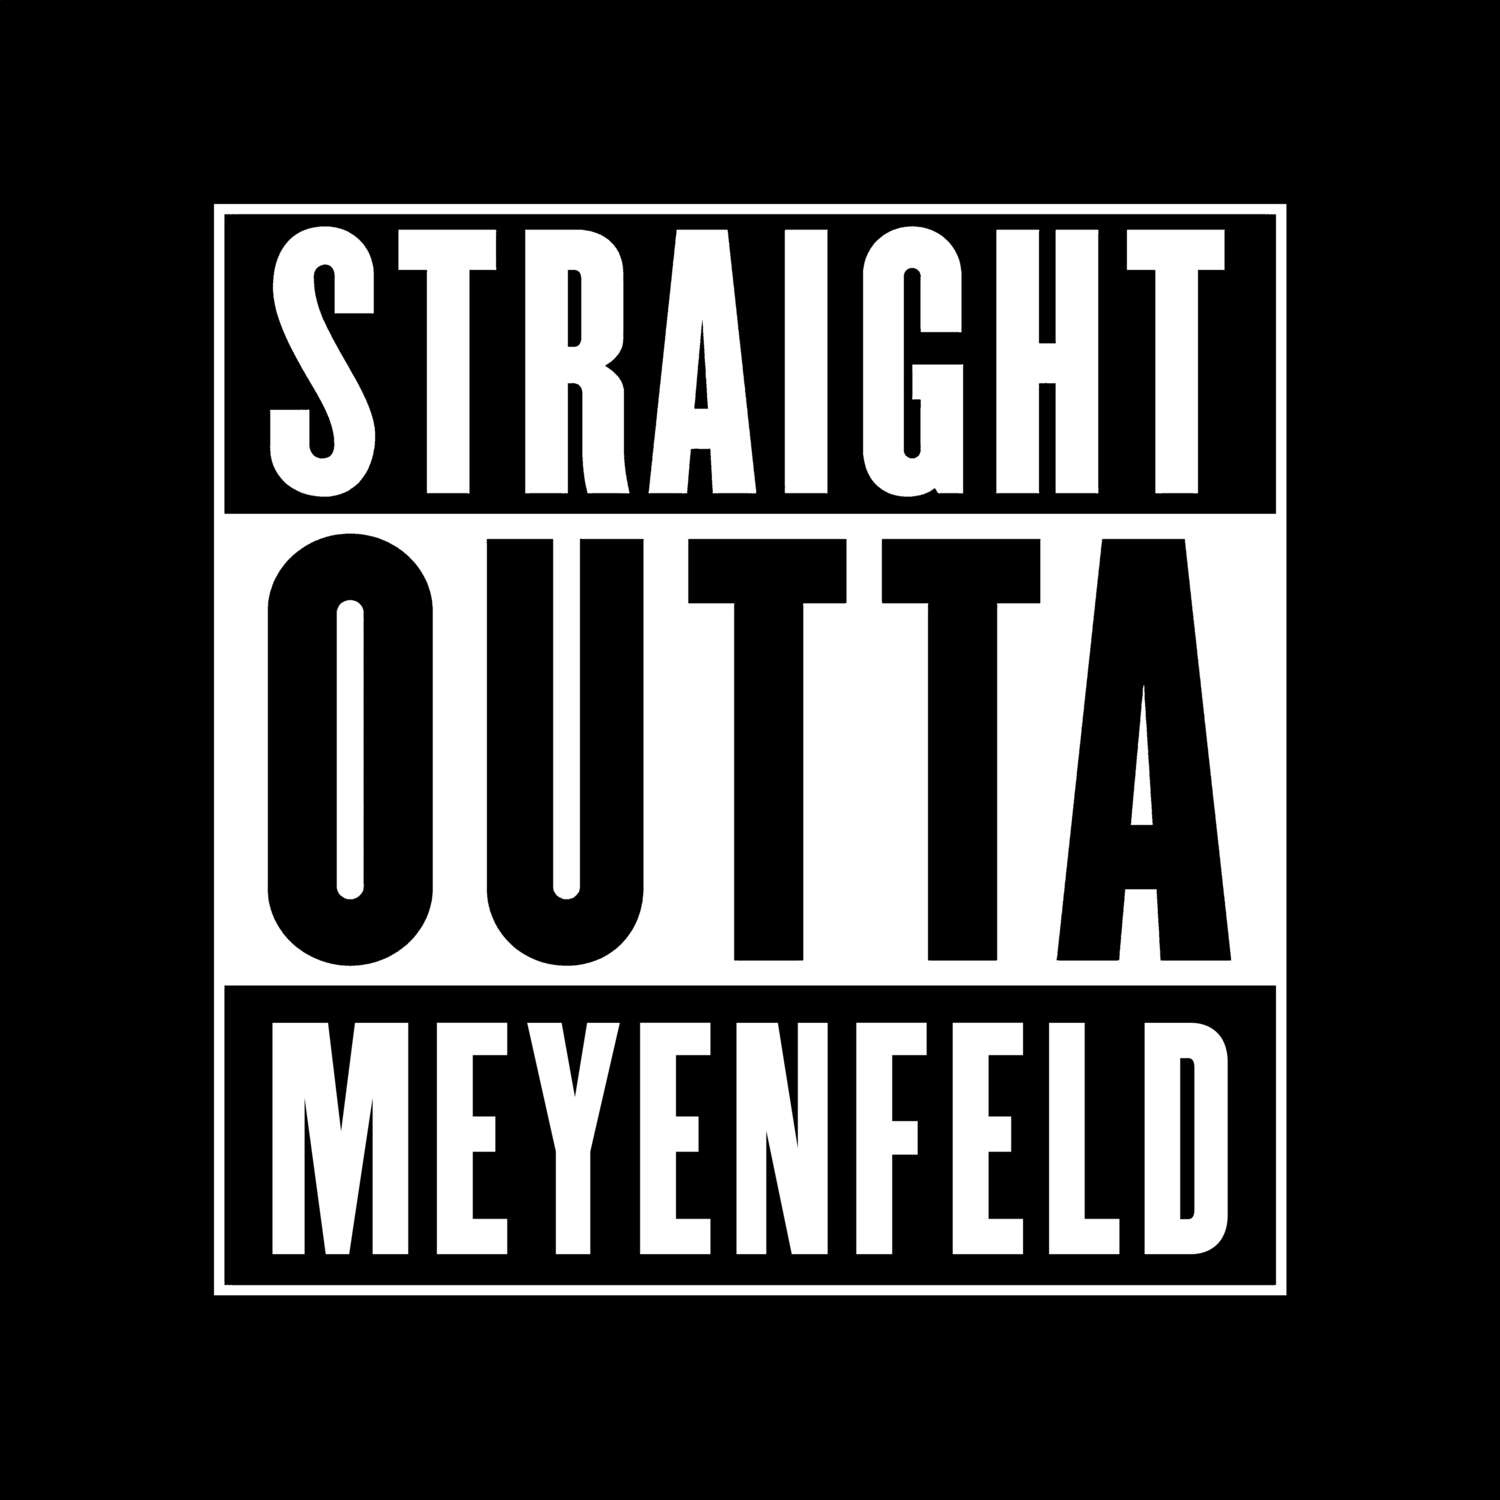 Meyenfeld T-Shirt »Straight Outta«